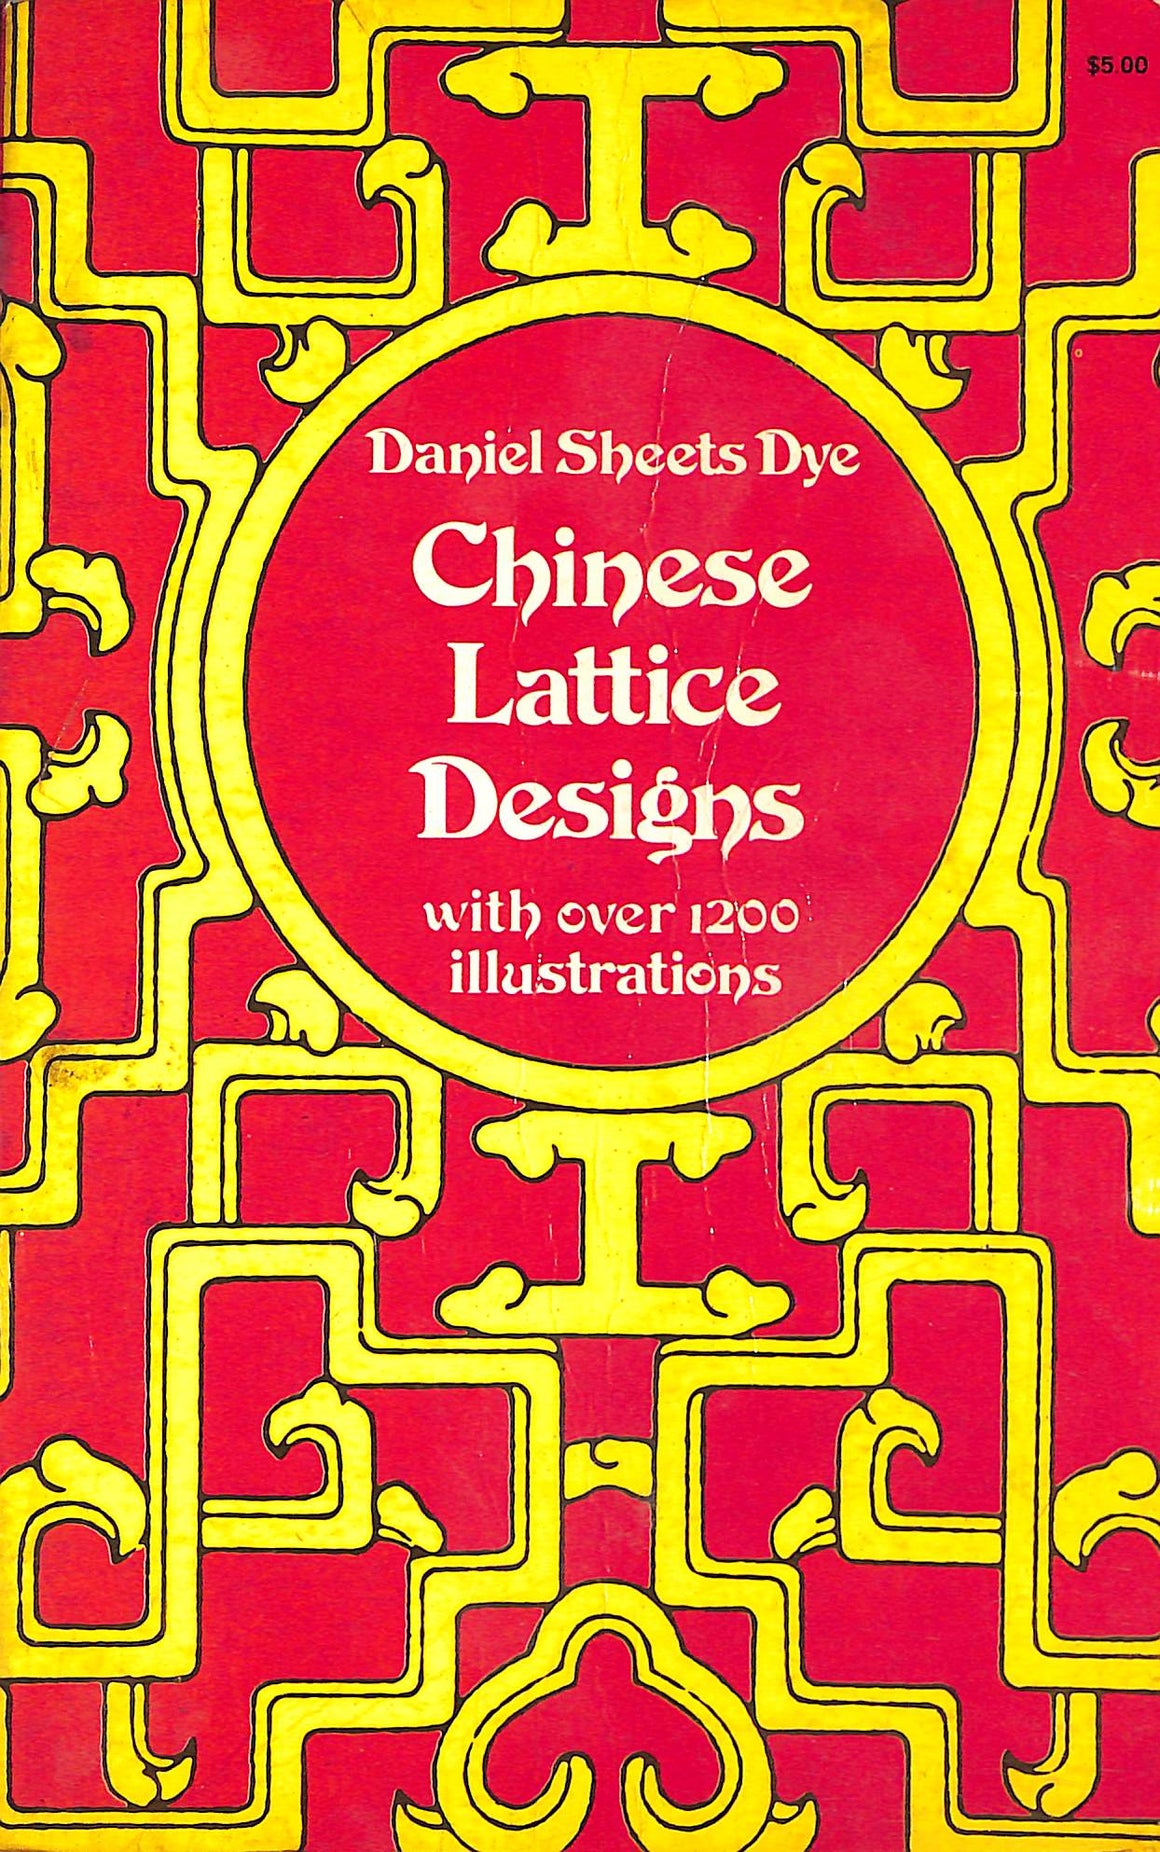 "Chinese Lattice Designs" 1974 DYE, Daniel Sheets